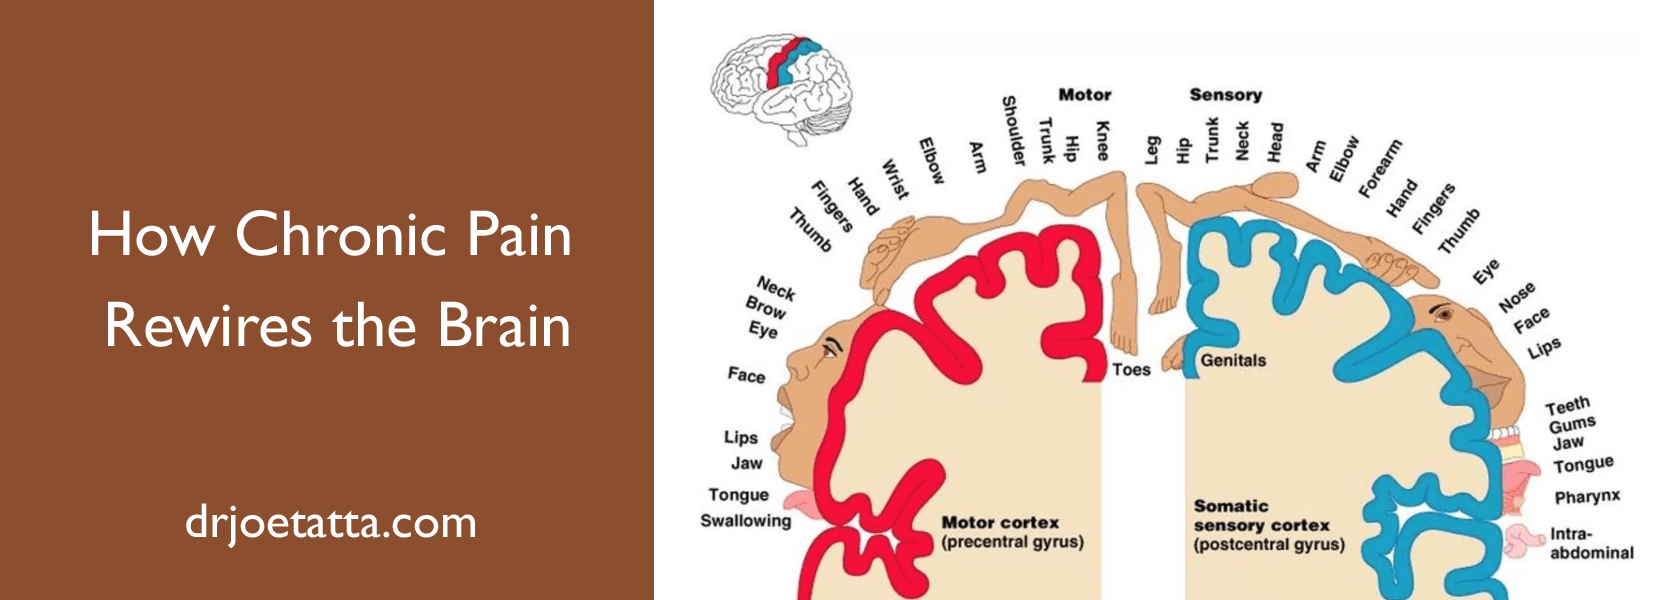 How Chronic Pain Rewires the Brain